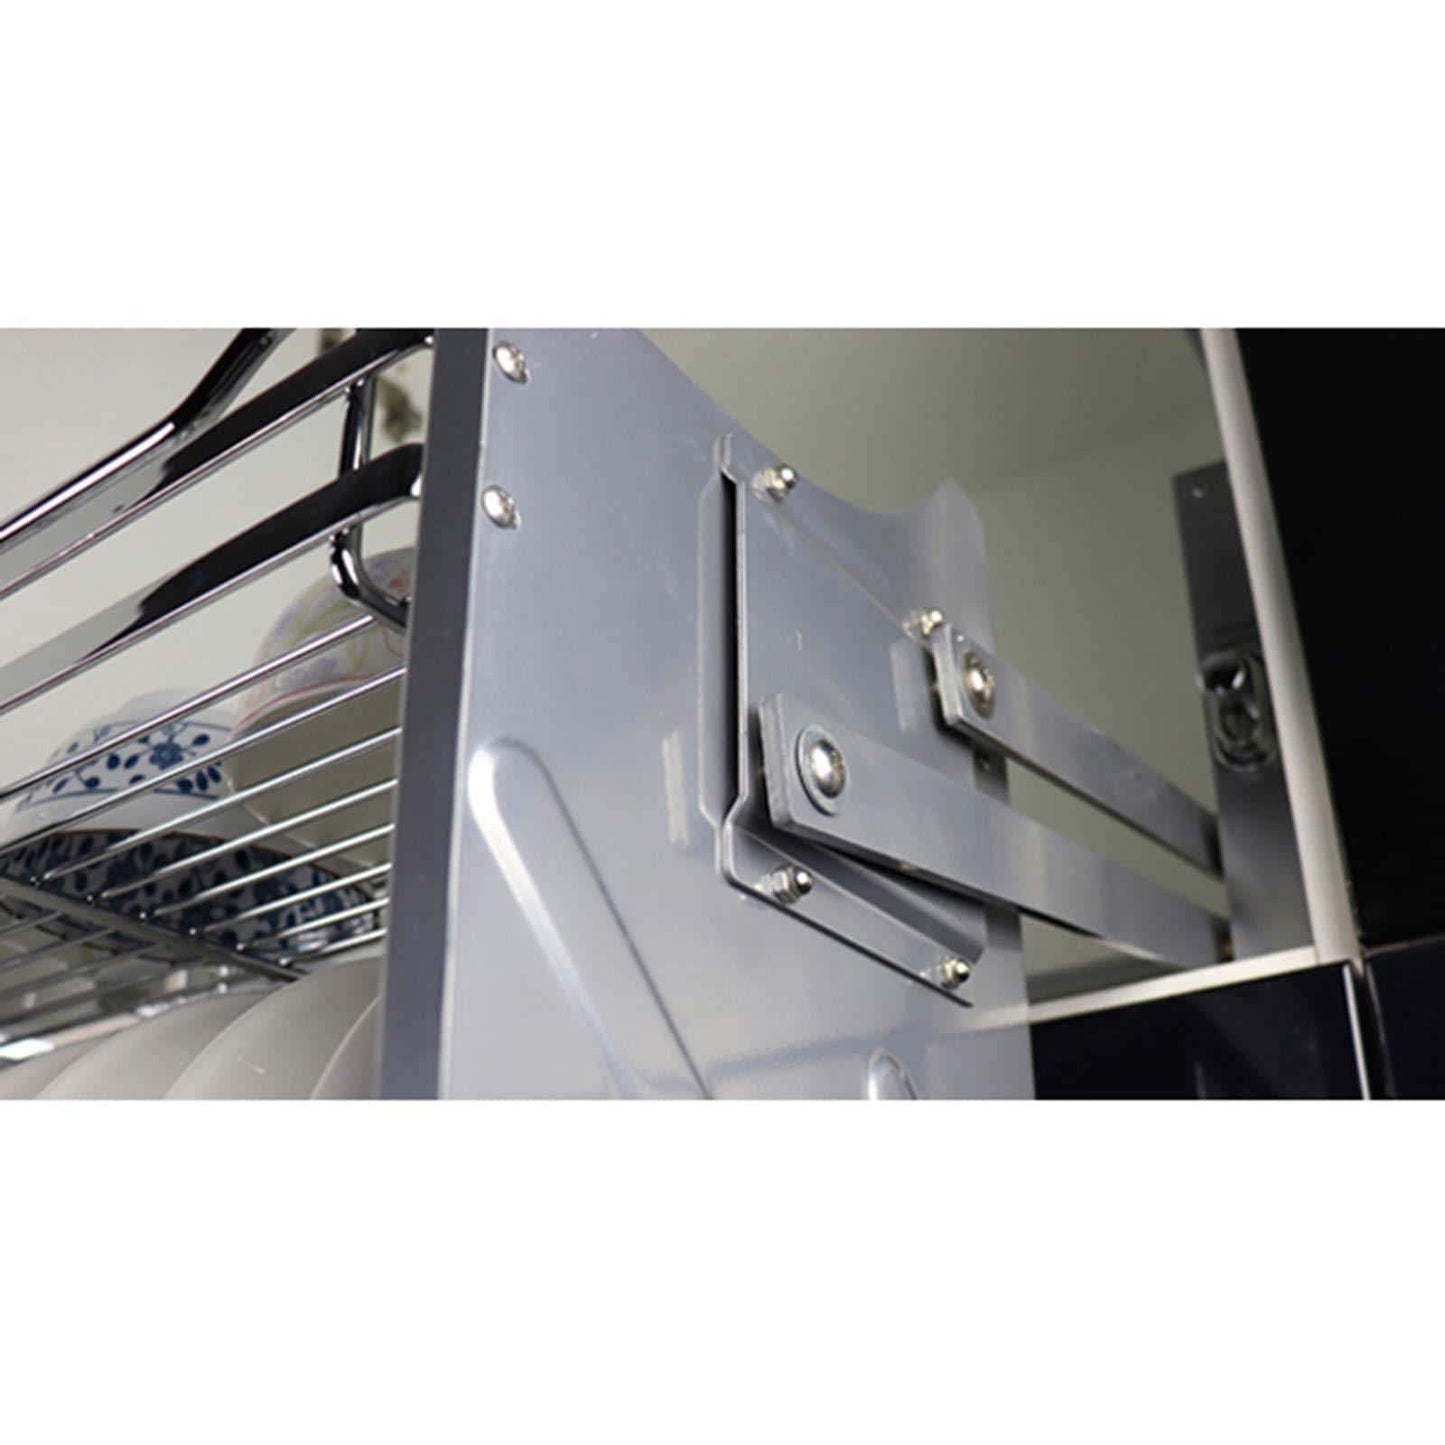 Get pull down 2 tier chrome steel wire dish drainer rack utensils basket shelf plate holder for 800mm width cabinet kitchen